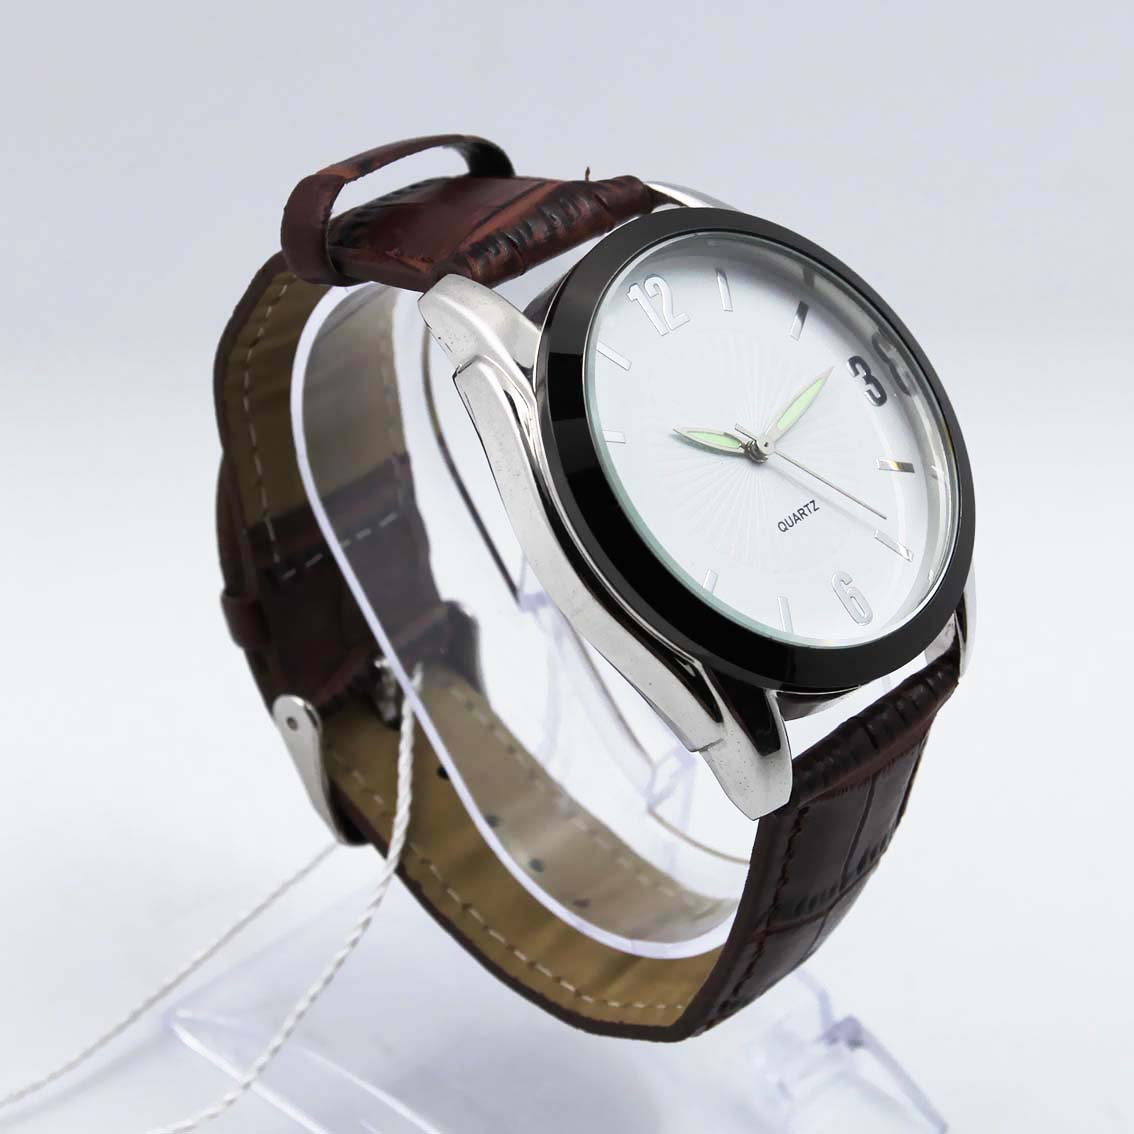 #02093Men's wristwatch quartz analog leather strap watch